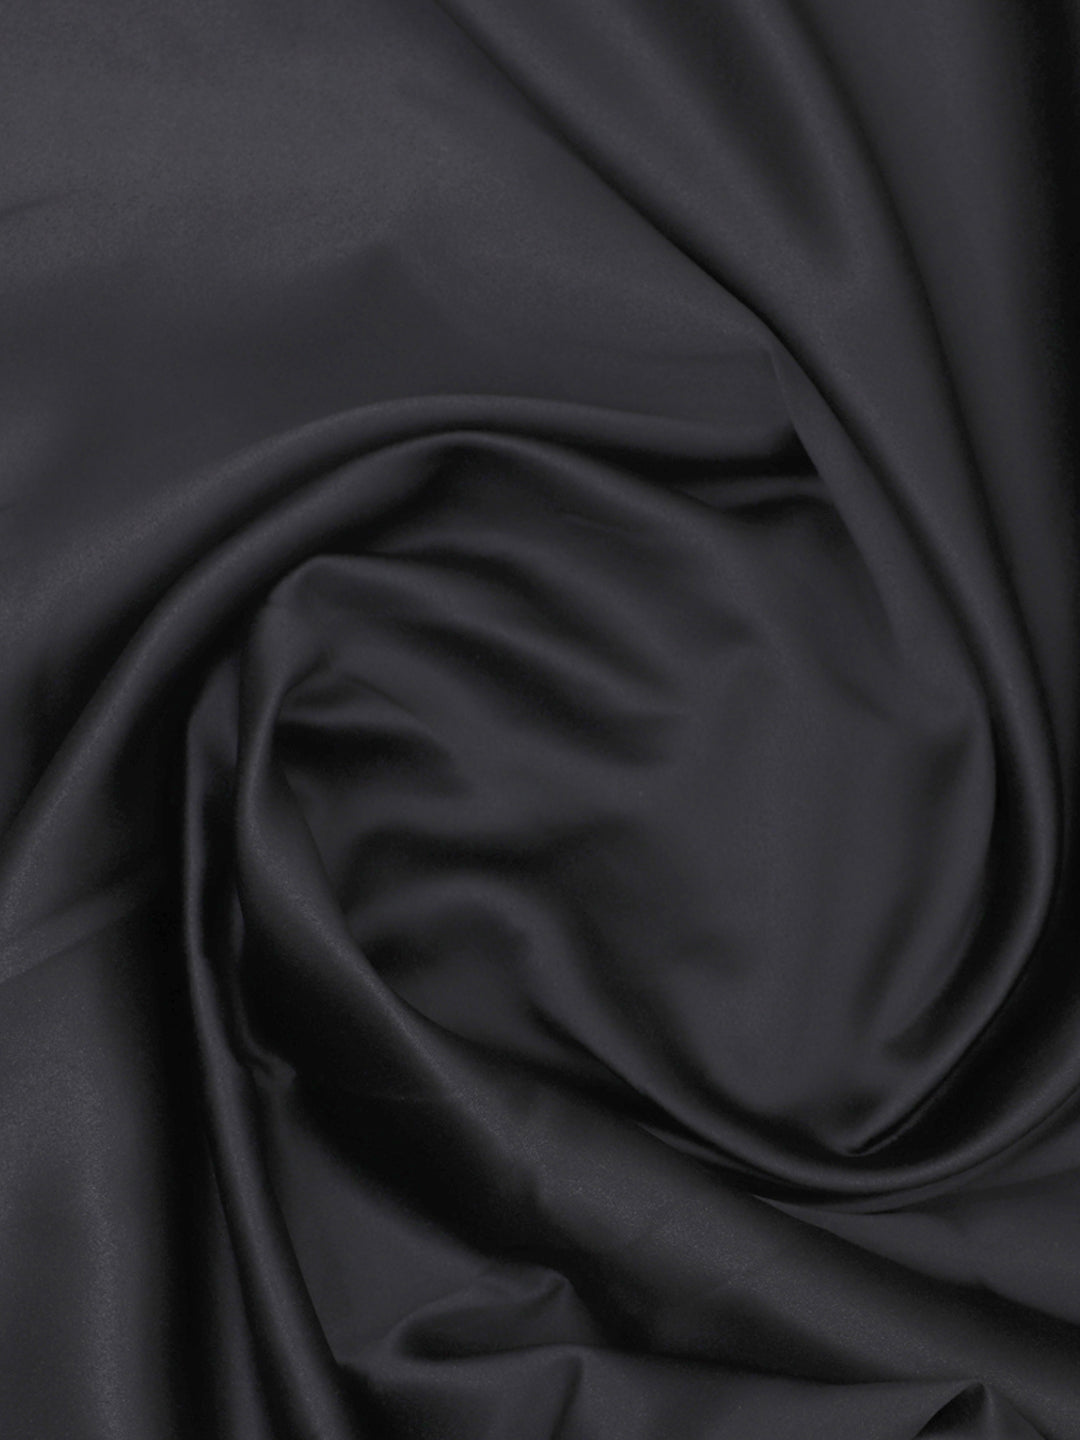 Subtle Black Plain Imported Satin Fabric